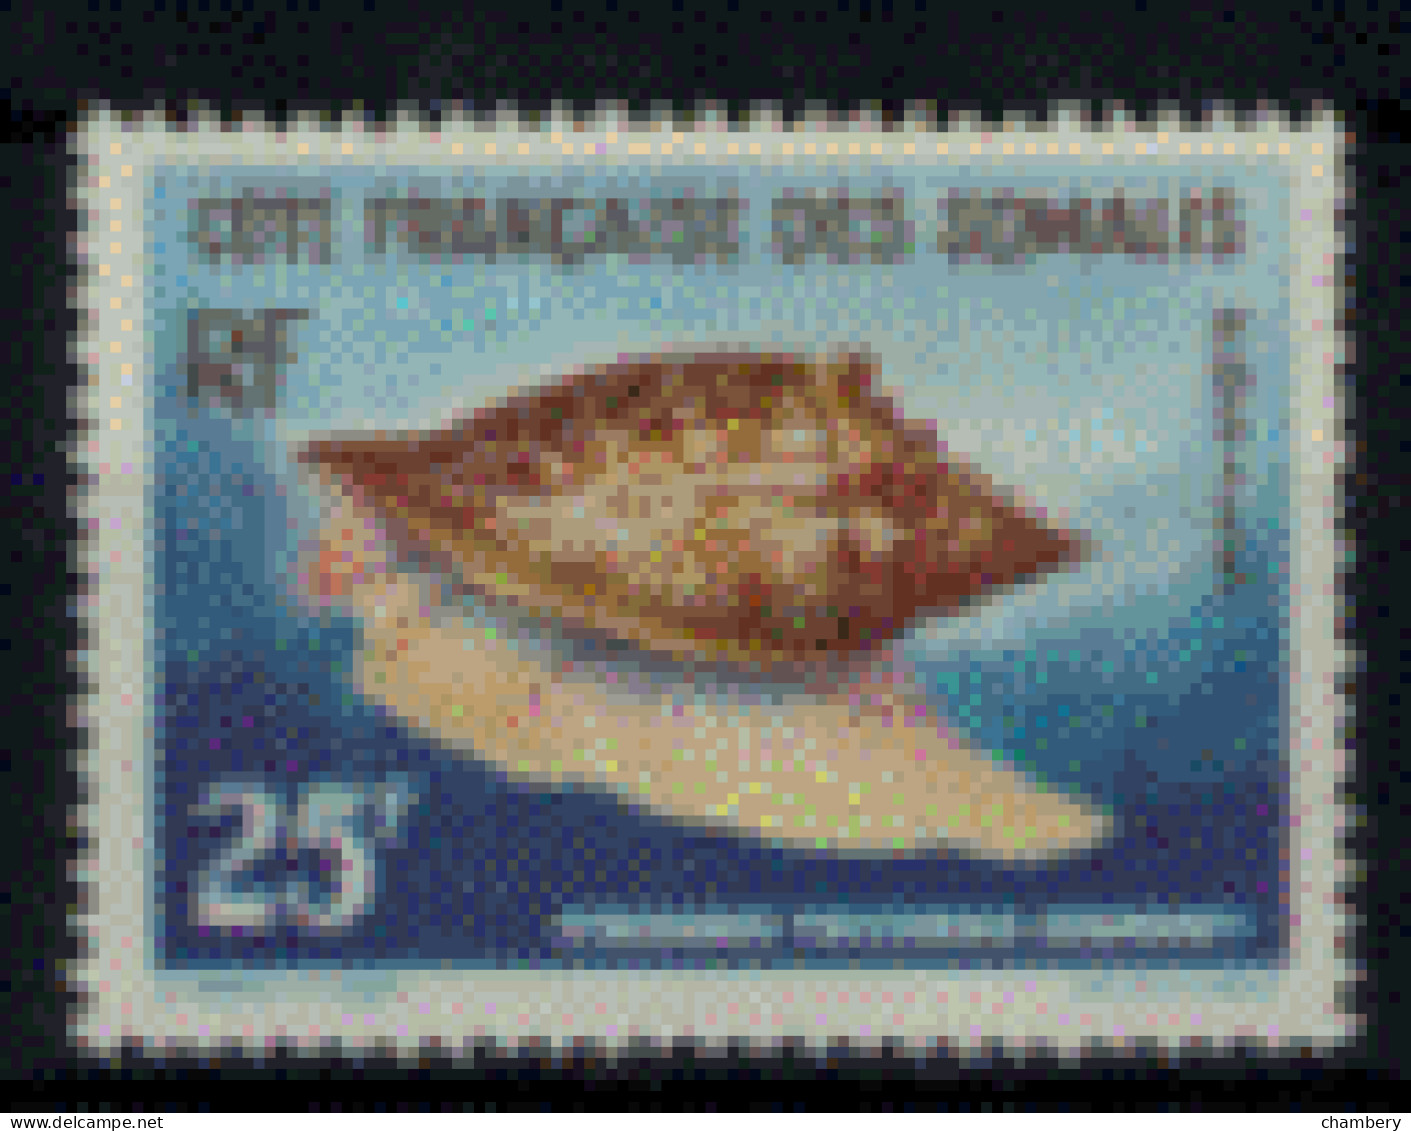 France - Somalies - "Coquillage De La Mer Rouge : Strombus" - Neuf 1* N° 313 De 1962 - Neufs